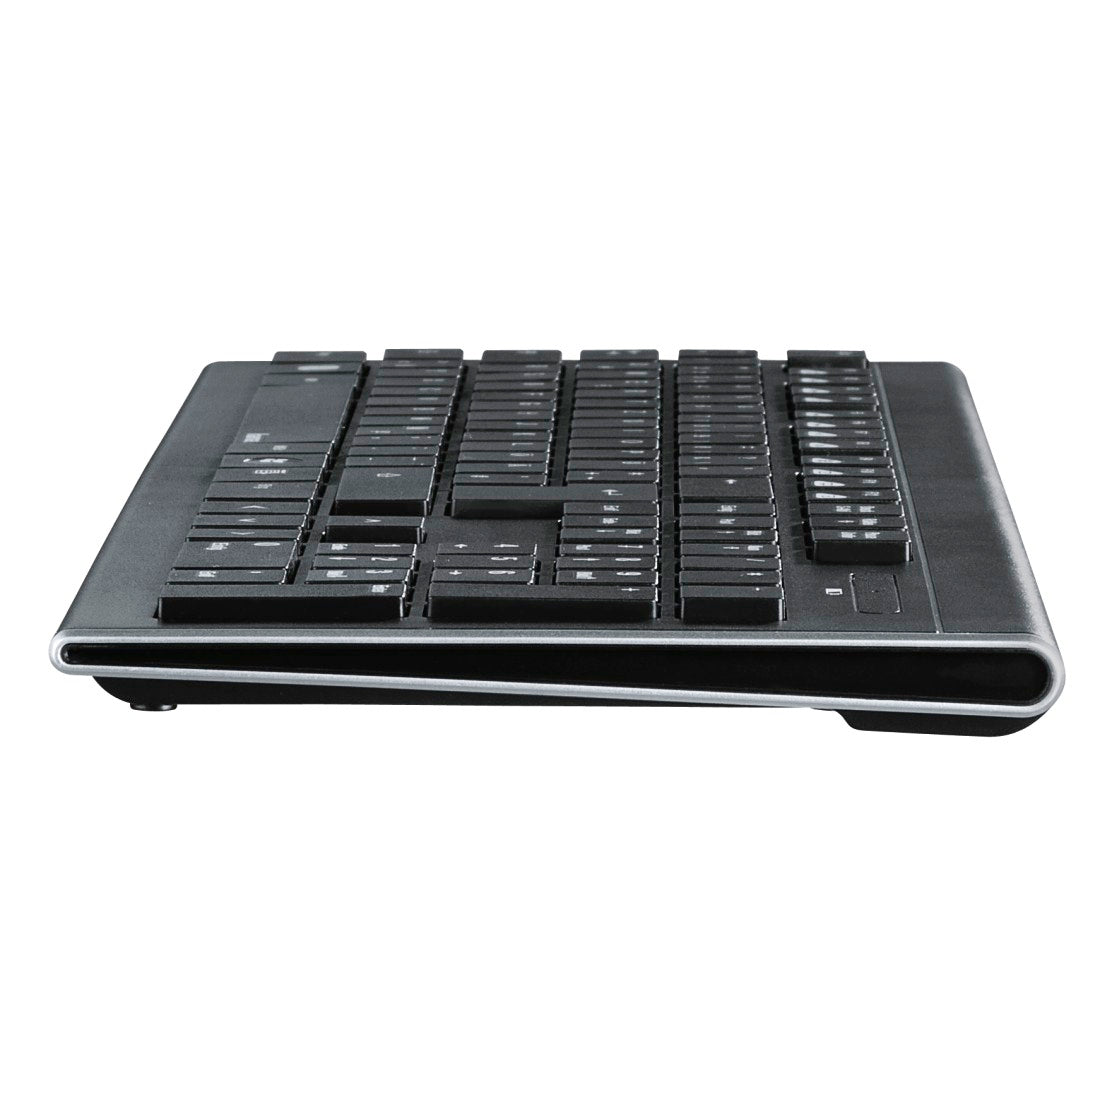 Hama Cortino Qwerty UK Wireless Keyboard &amp; Mouse Set - Black | 398819 from Hama - DID Electrical